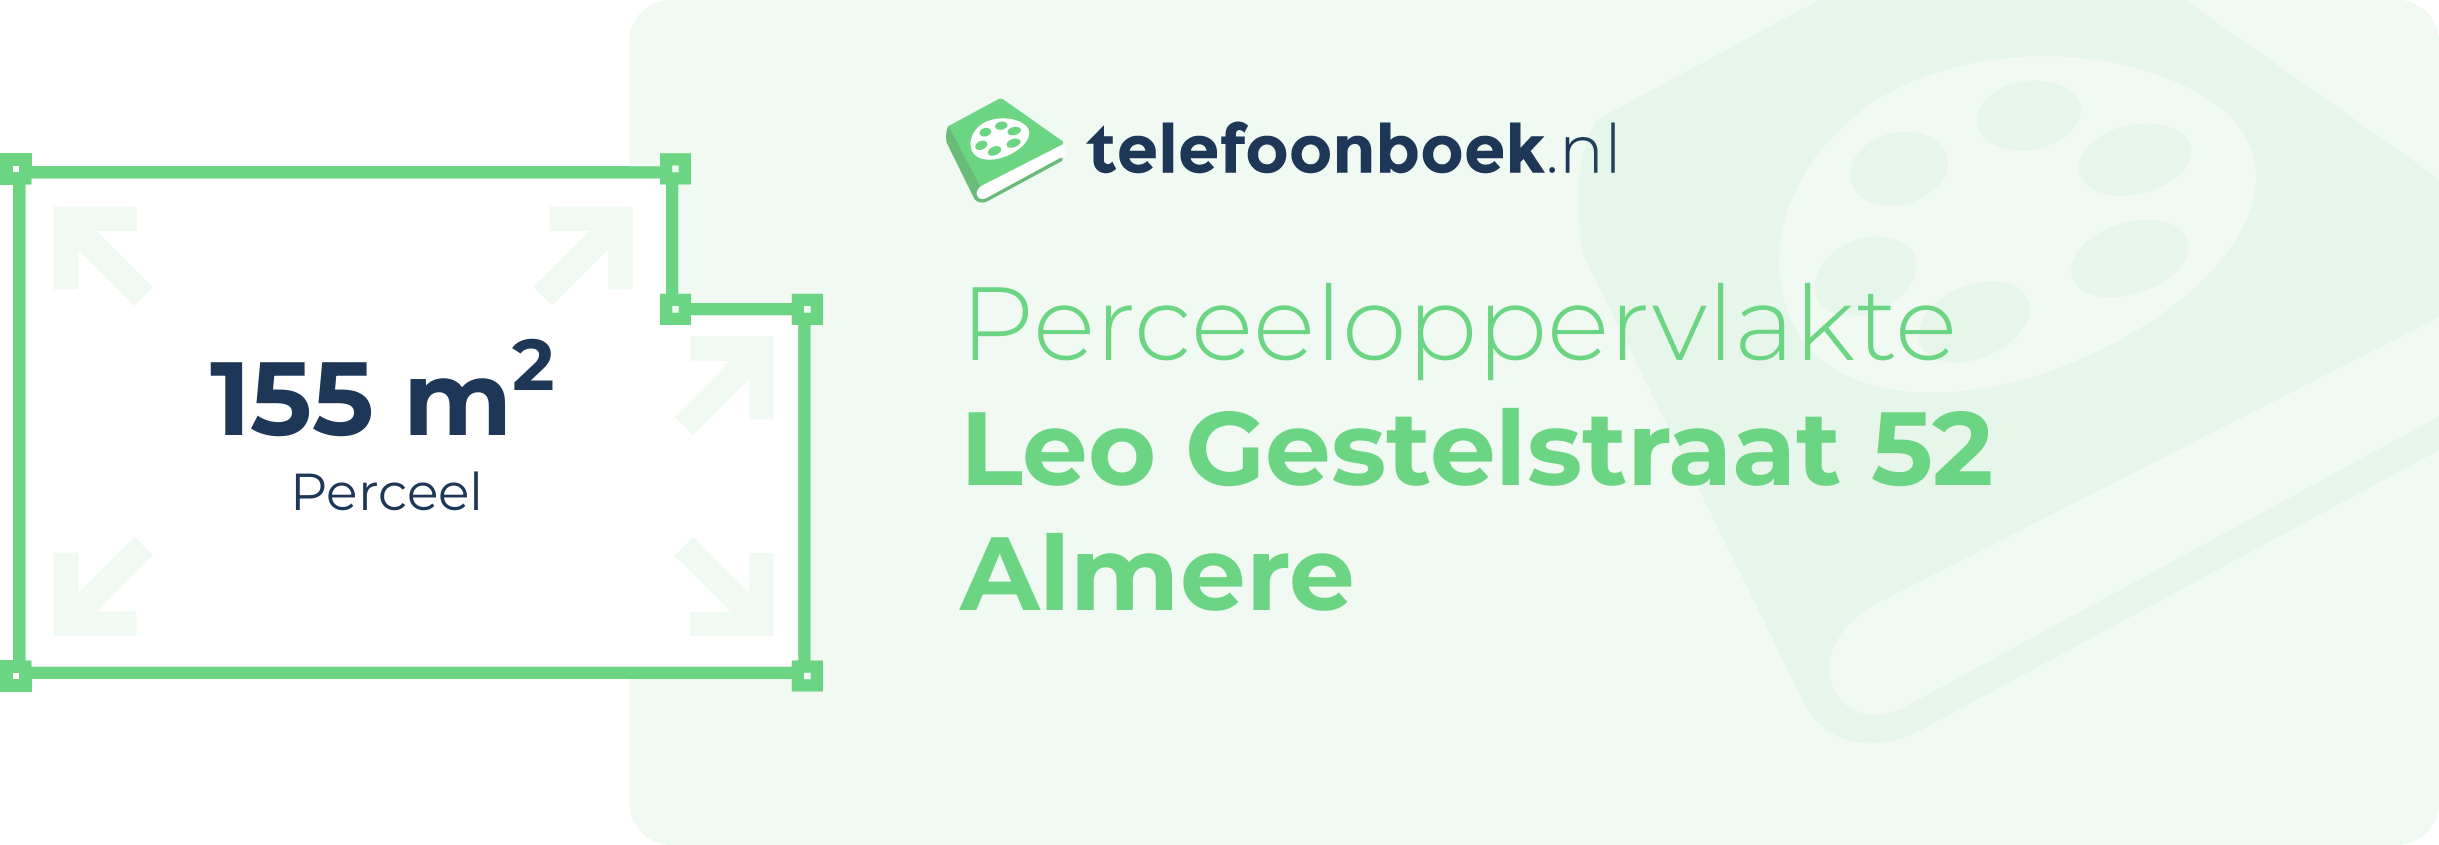 Perceeloppervlakte Leo Gestelstraat 52 Almere